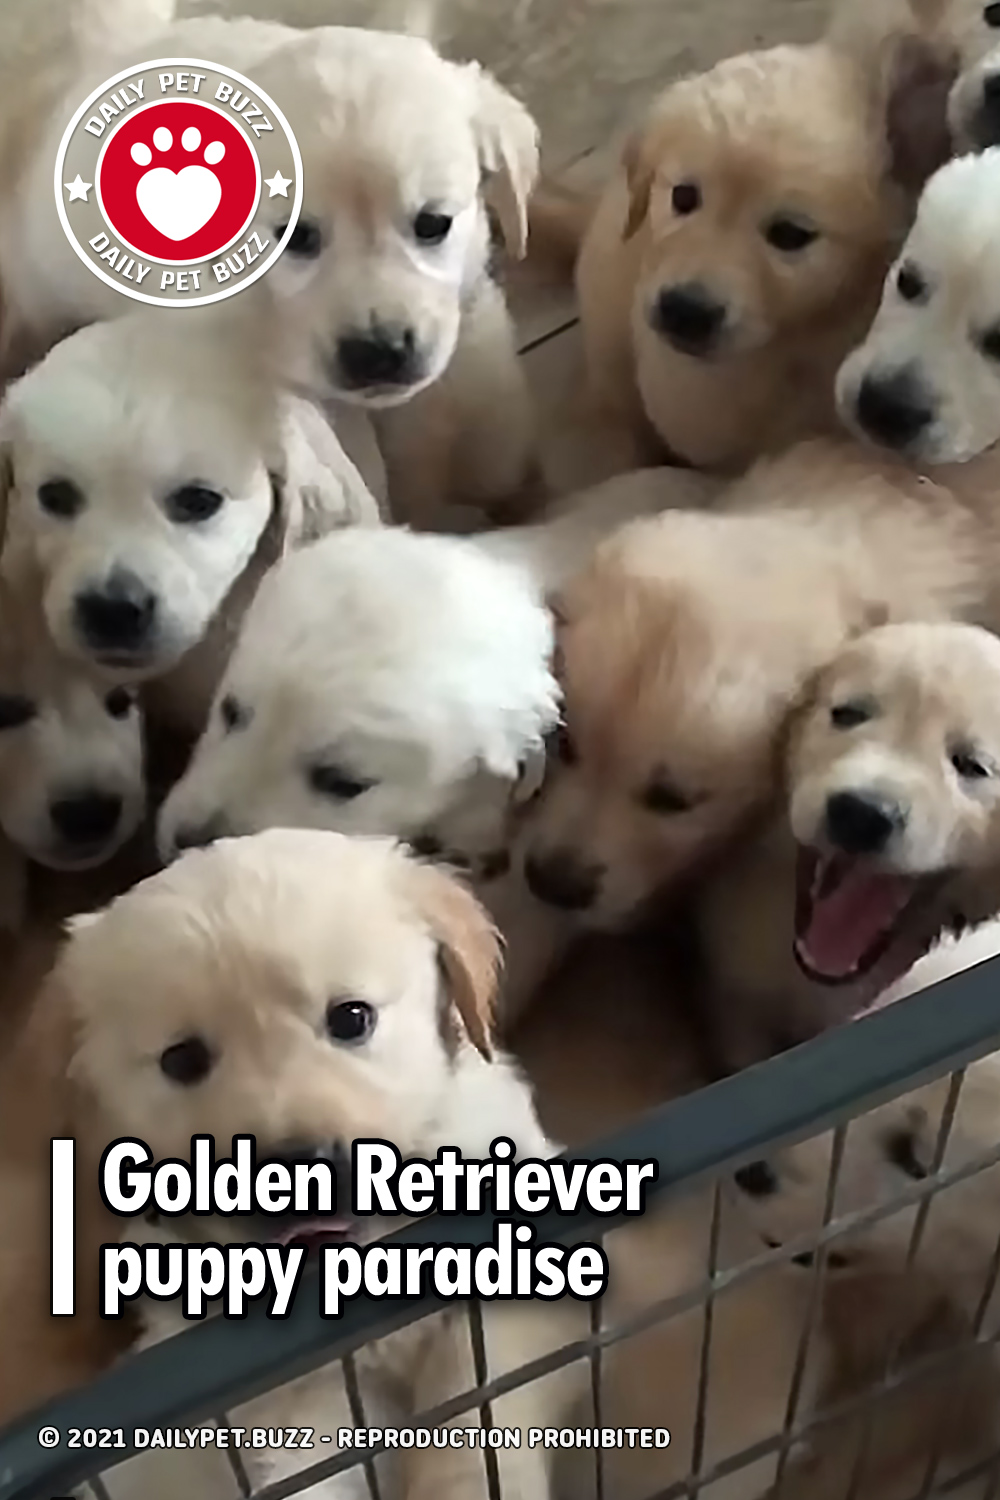 Golden Retriever puppy paradise